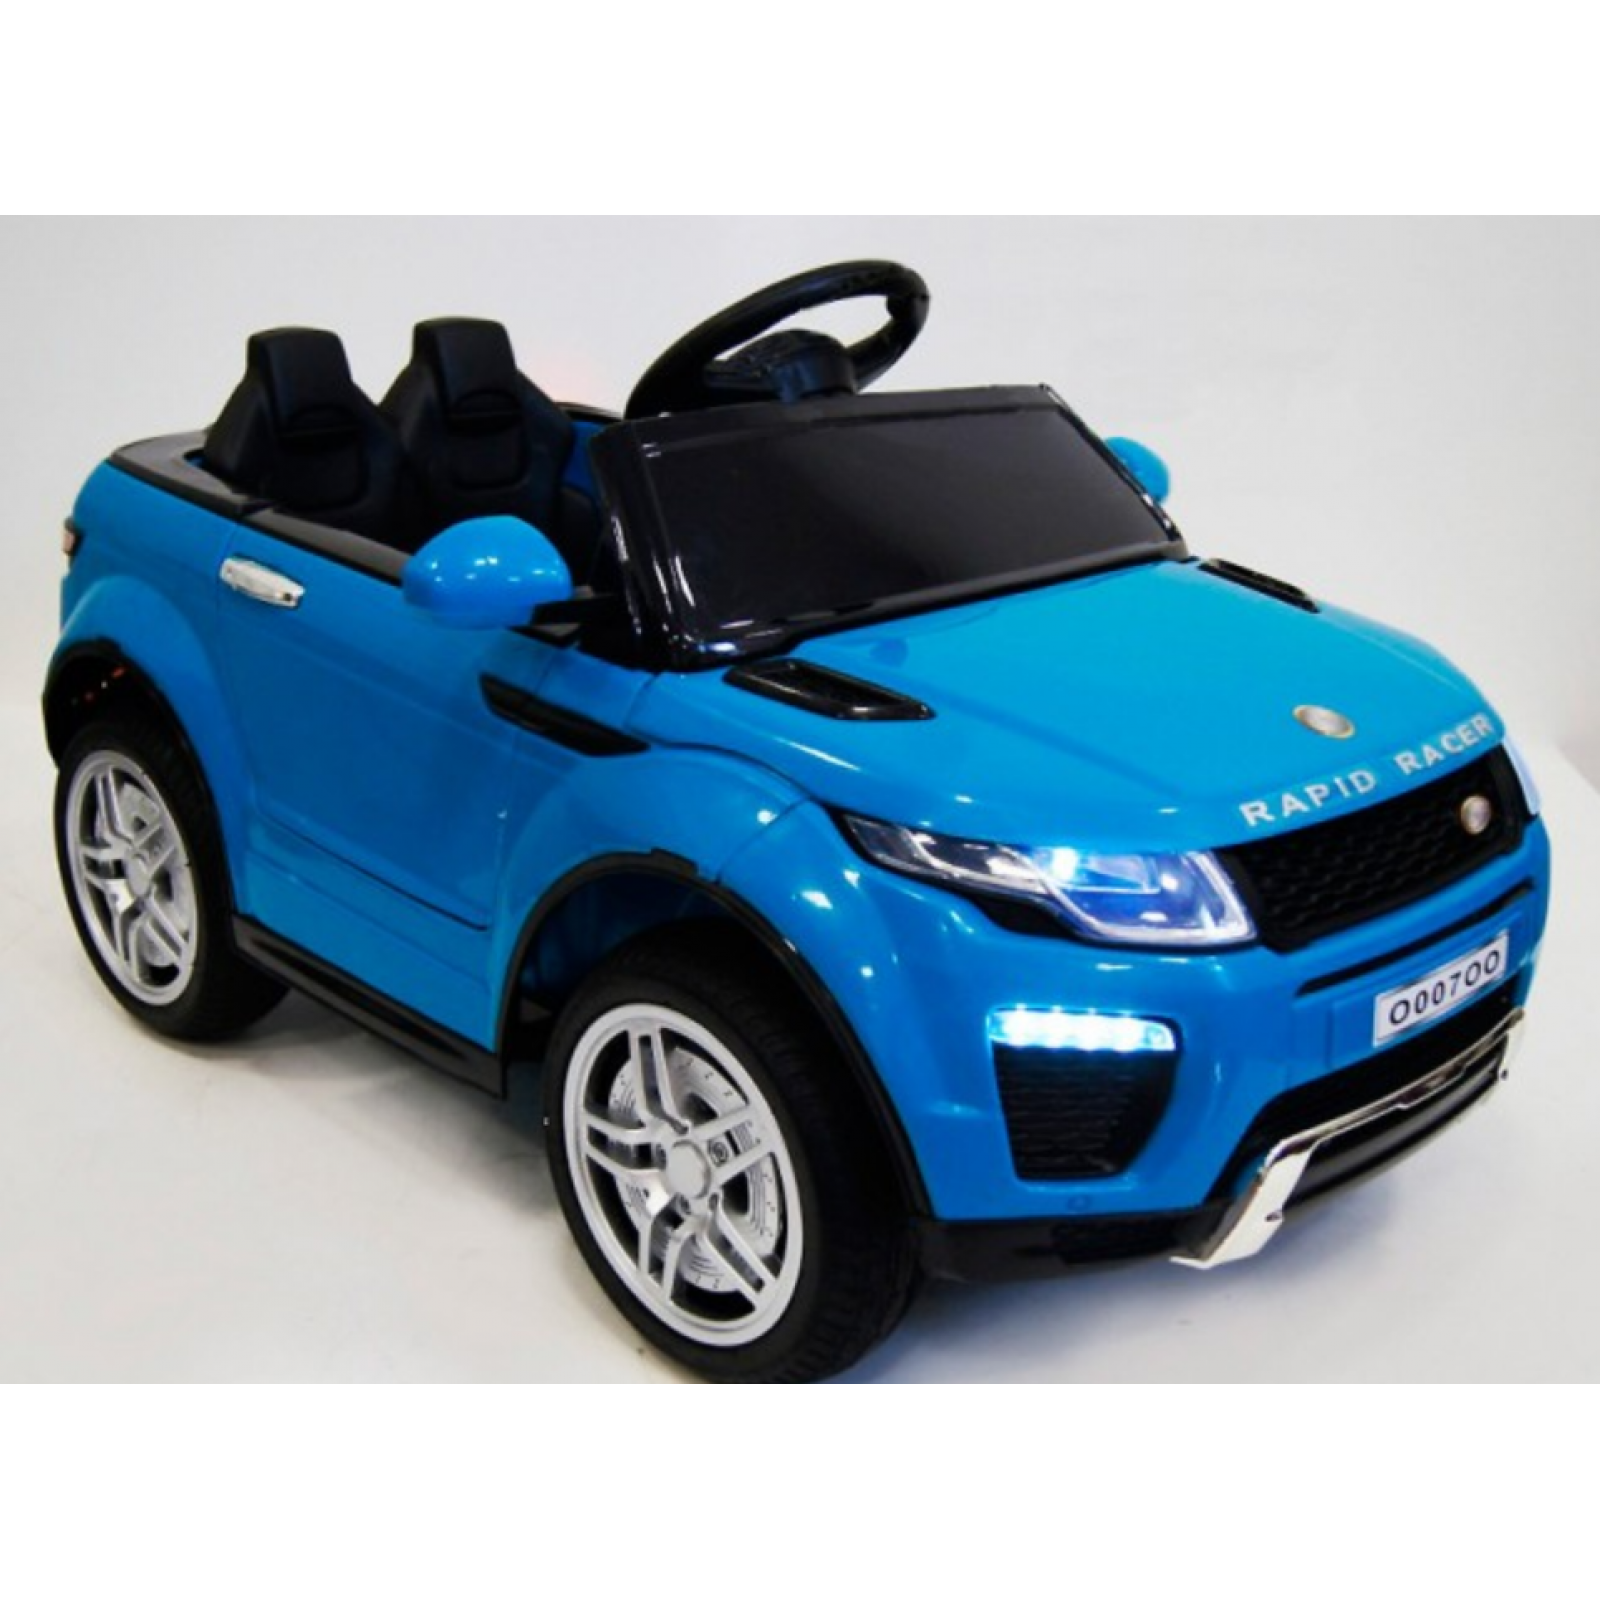 Детский электромобиль Range-Rover (O007OO) VIP